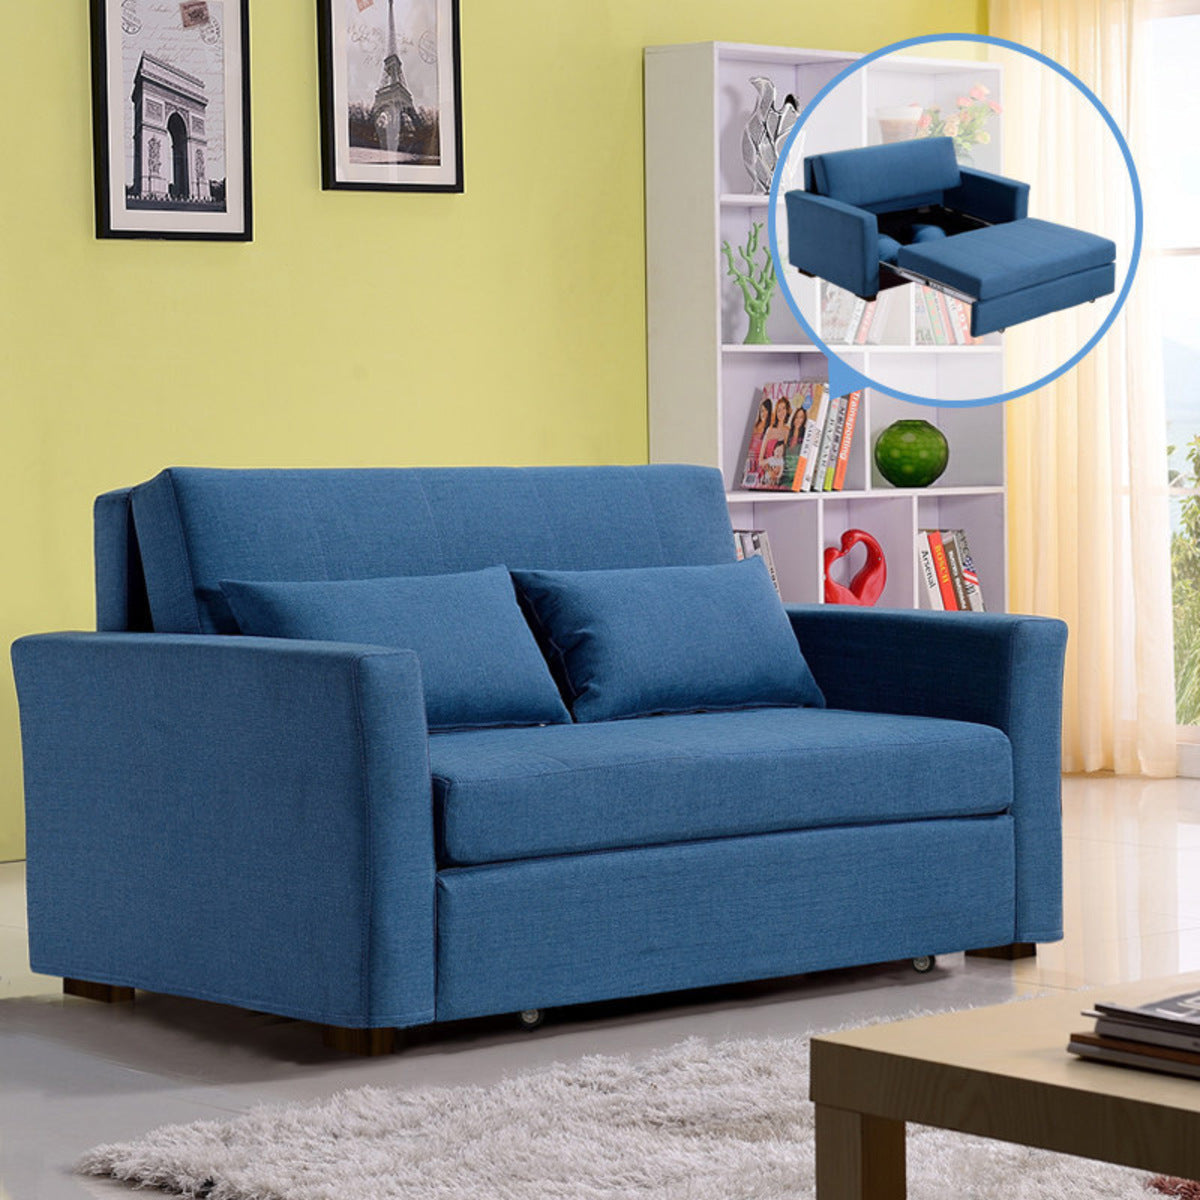 MerryRabbit - 125cm多功能布藝兩座位儲物梳化床MR-6019 2 seater Multi - functional fabric Sofa bed with storage 1.25 meter